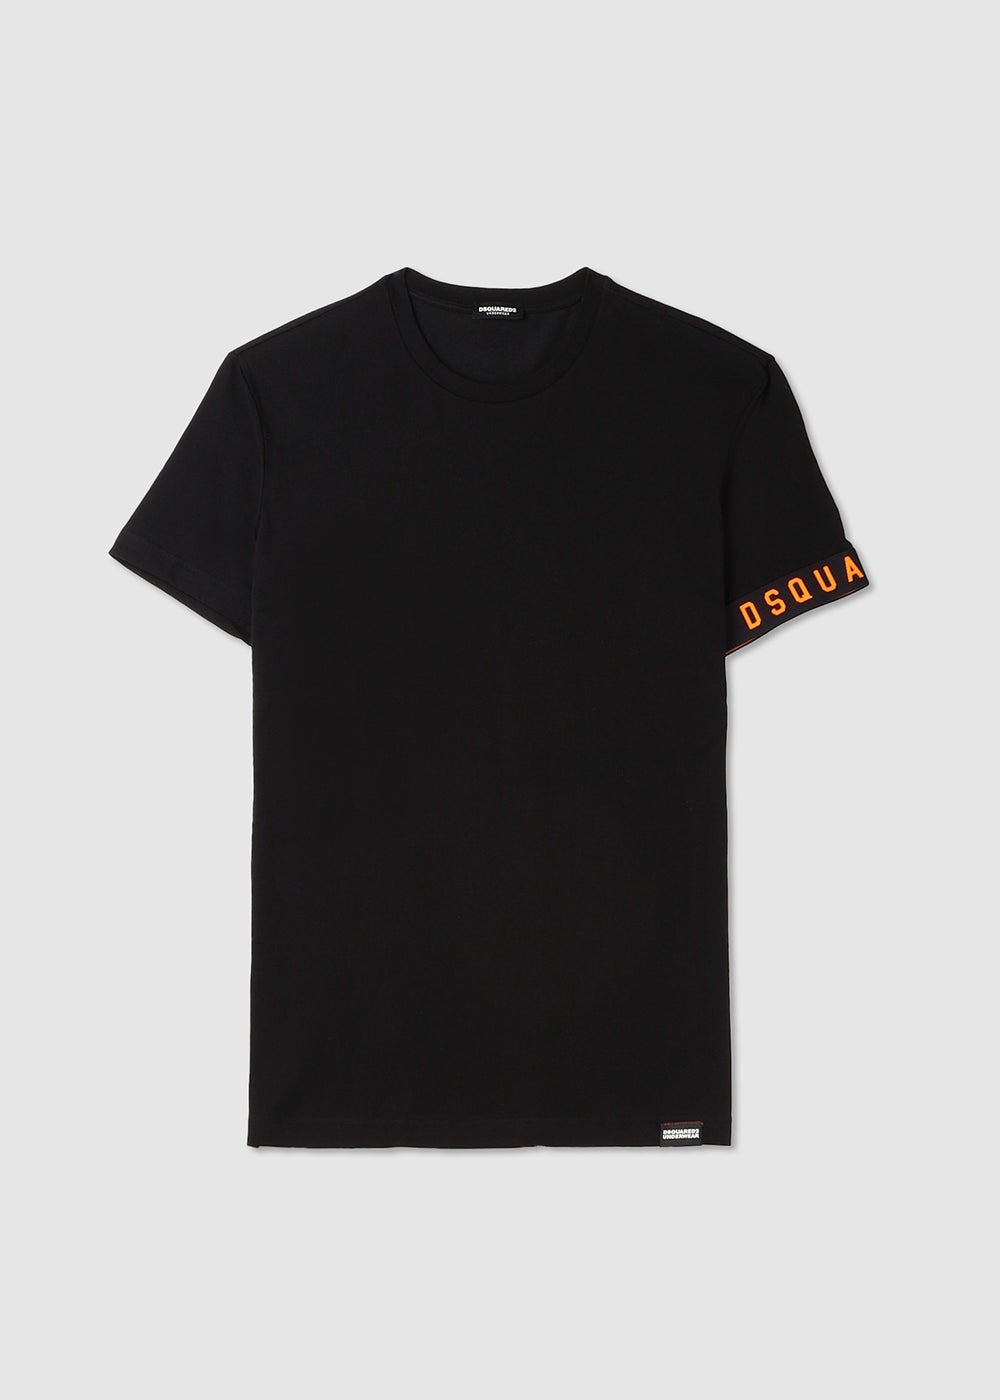 Dsquared2 Mens T-Shirt In Black/Orange - Black